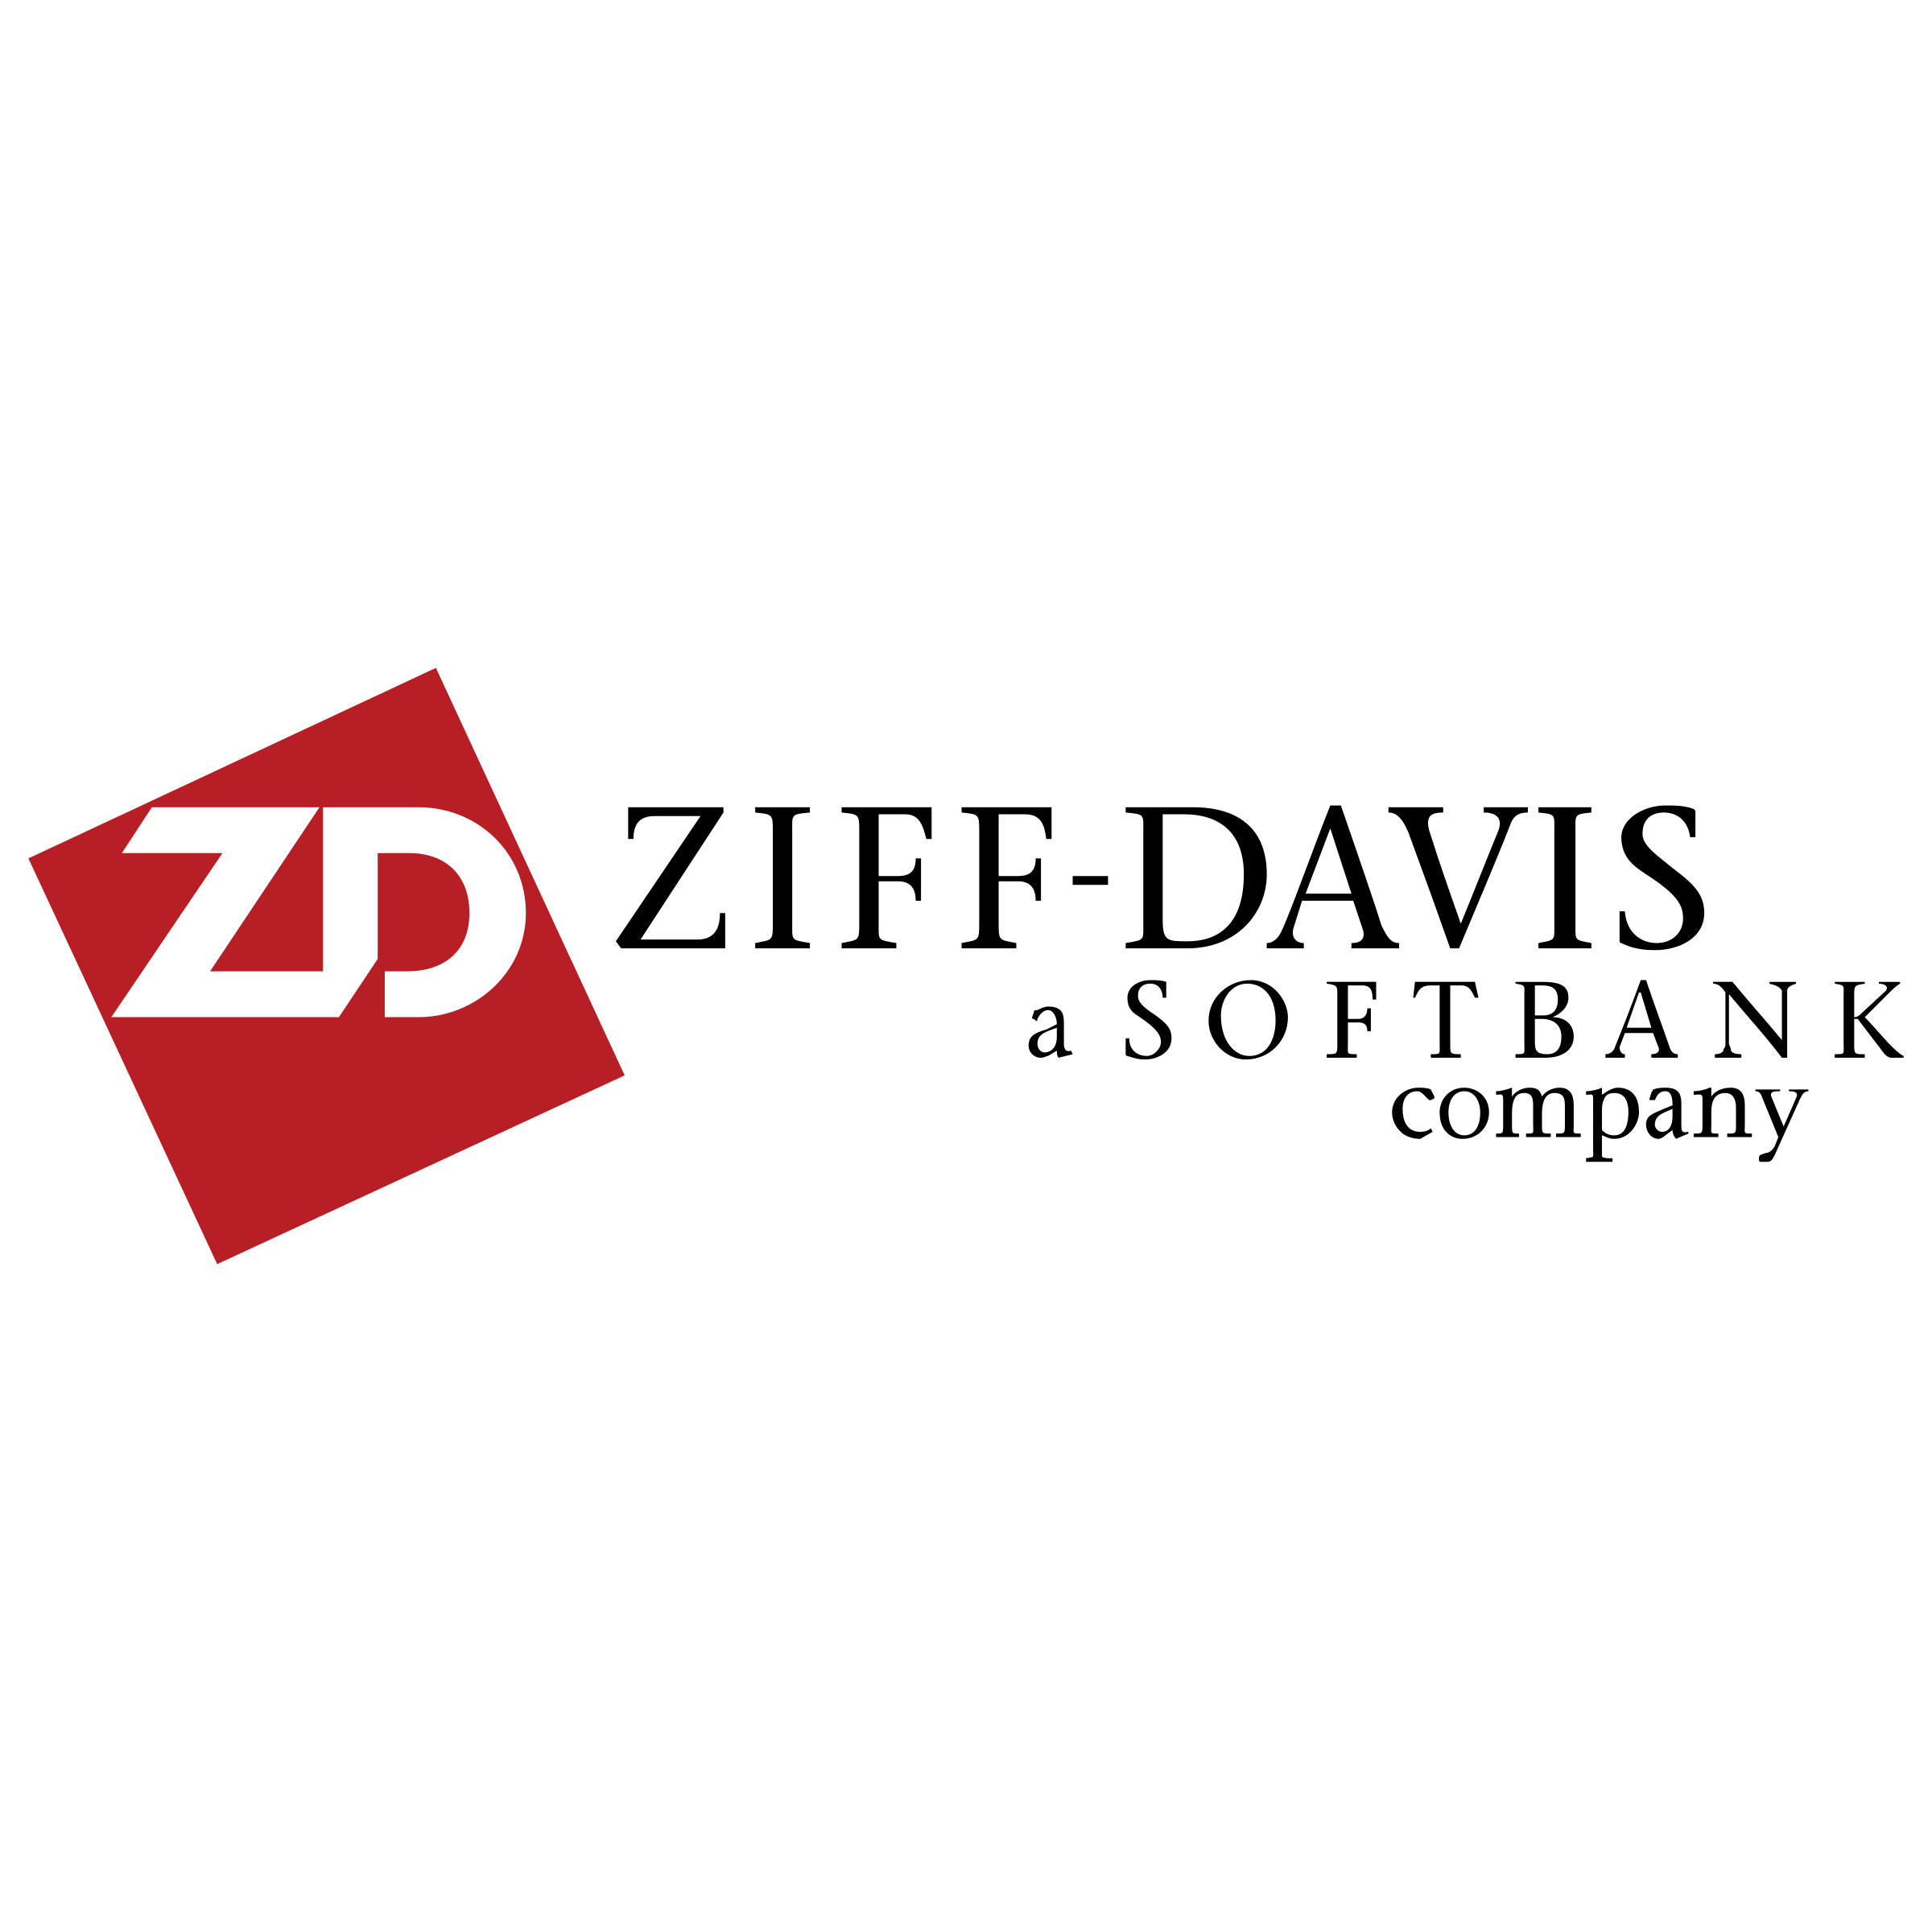 ZD Logo - ZD Logo PNG Transparent & SVG Vector - Freebie Supply